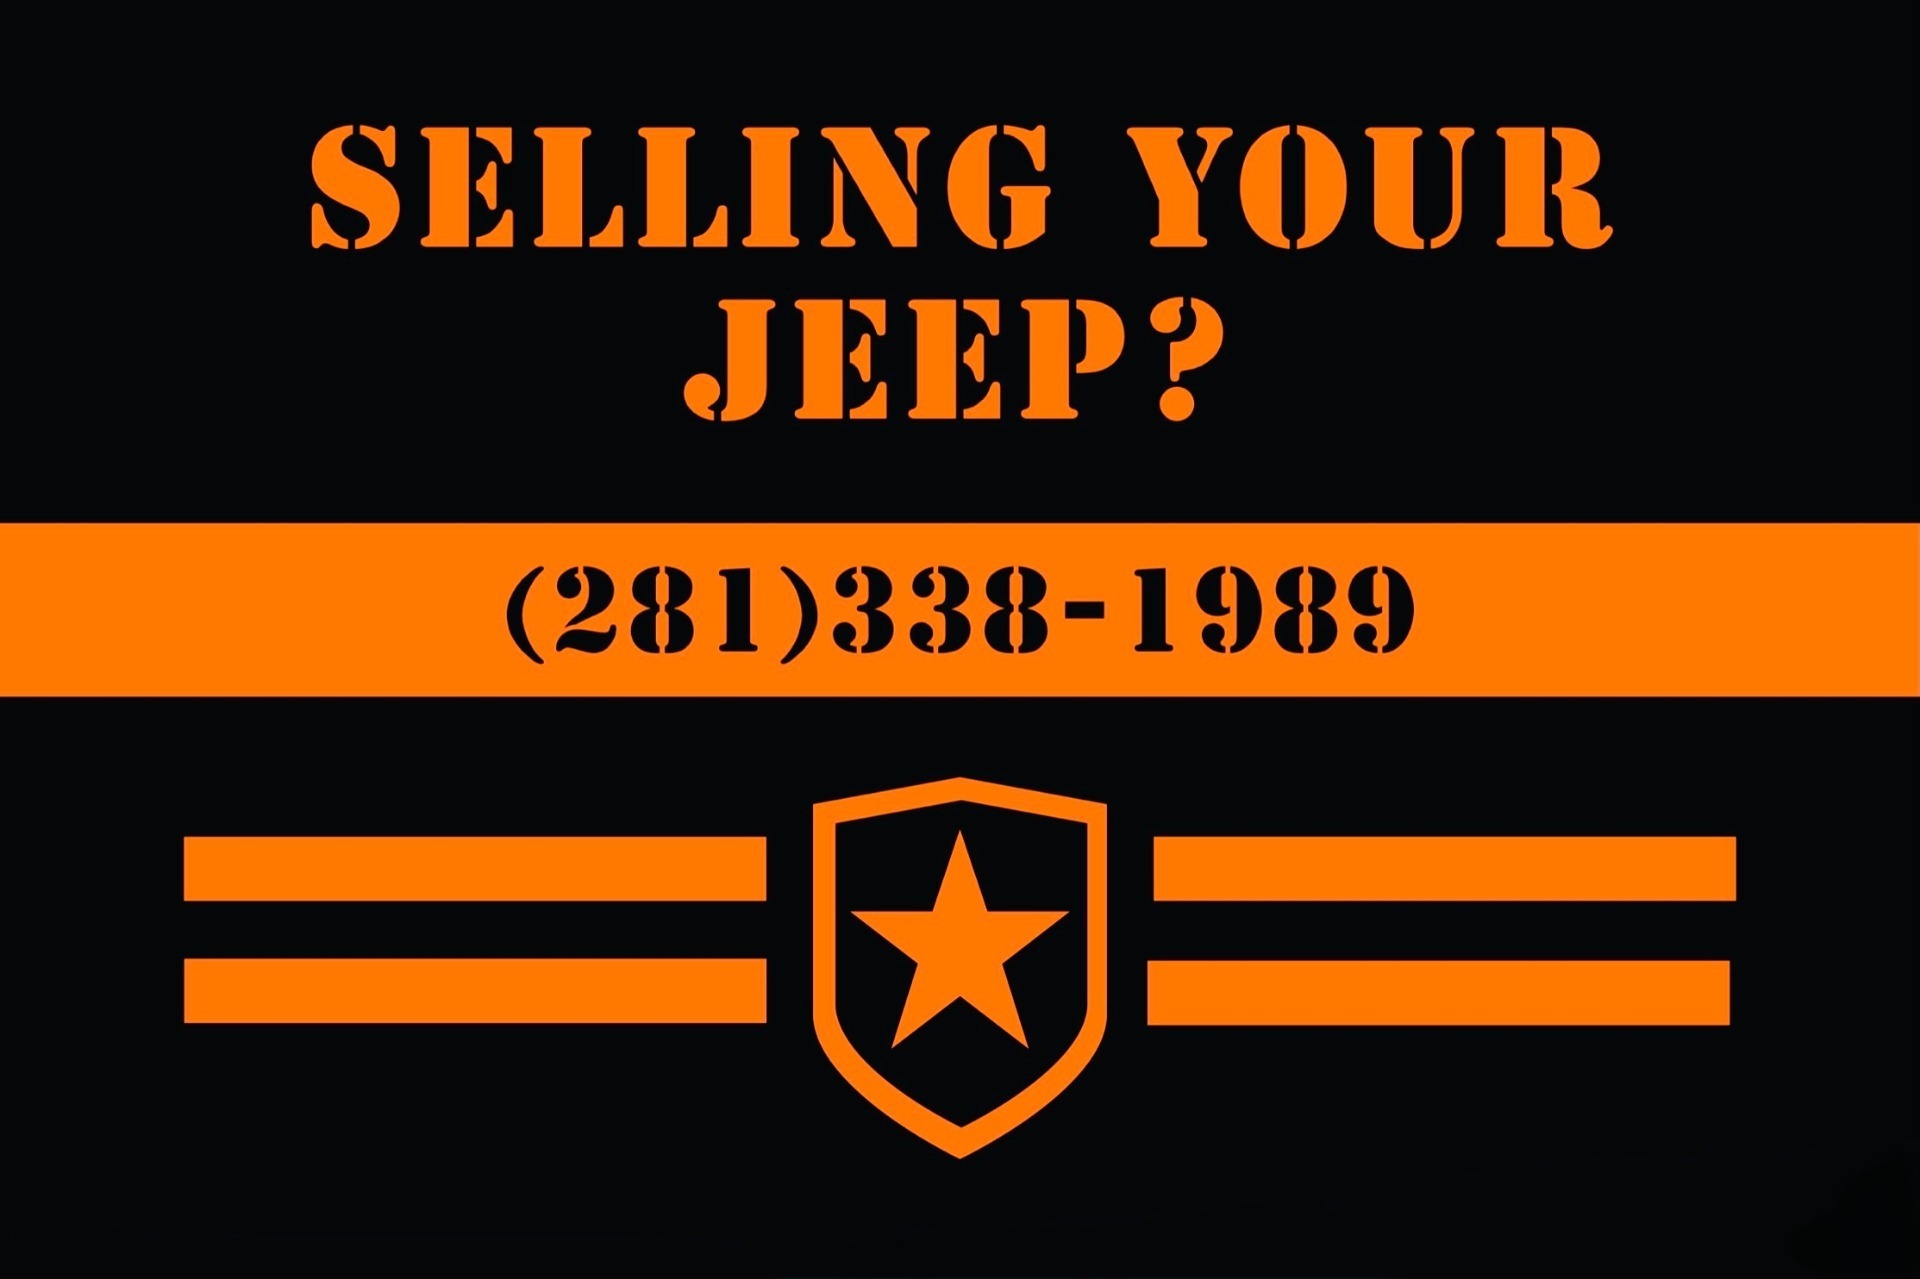 Used-1989-Jeep-Wrangler